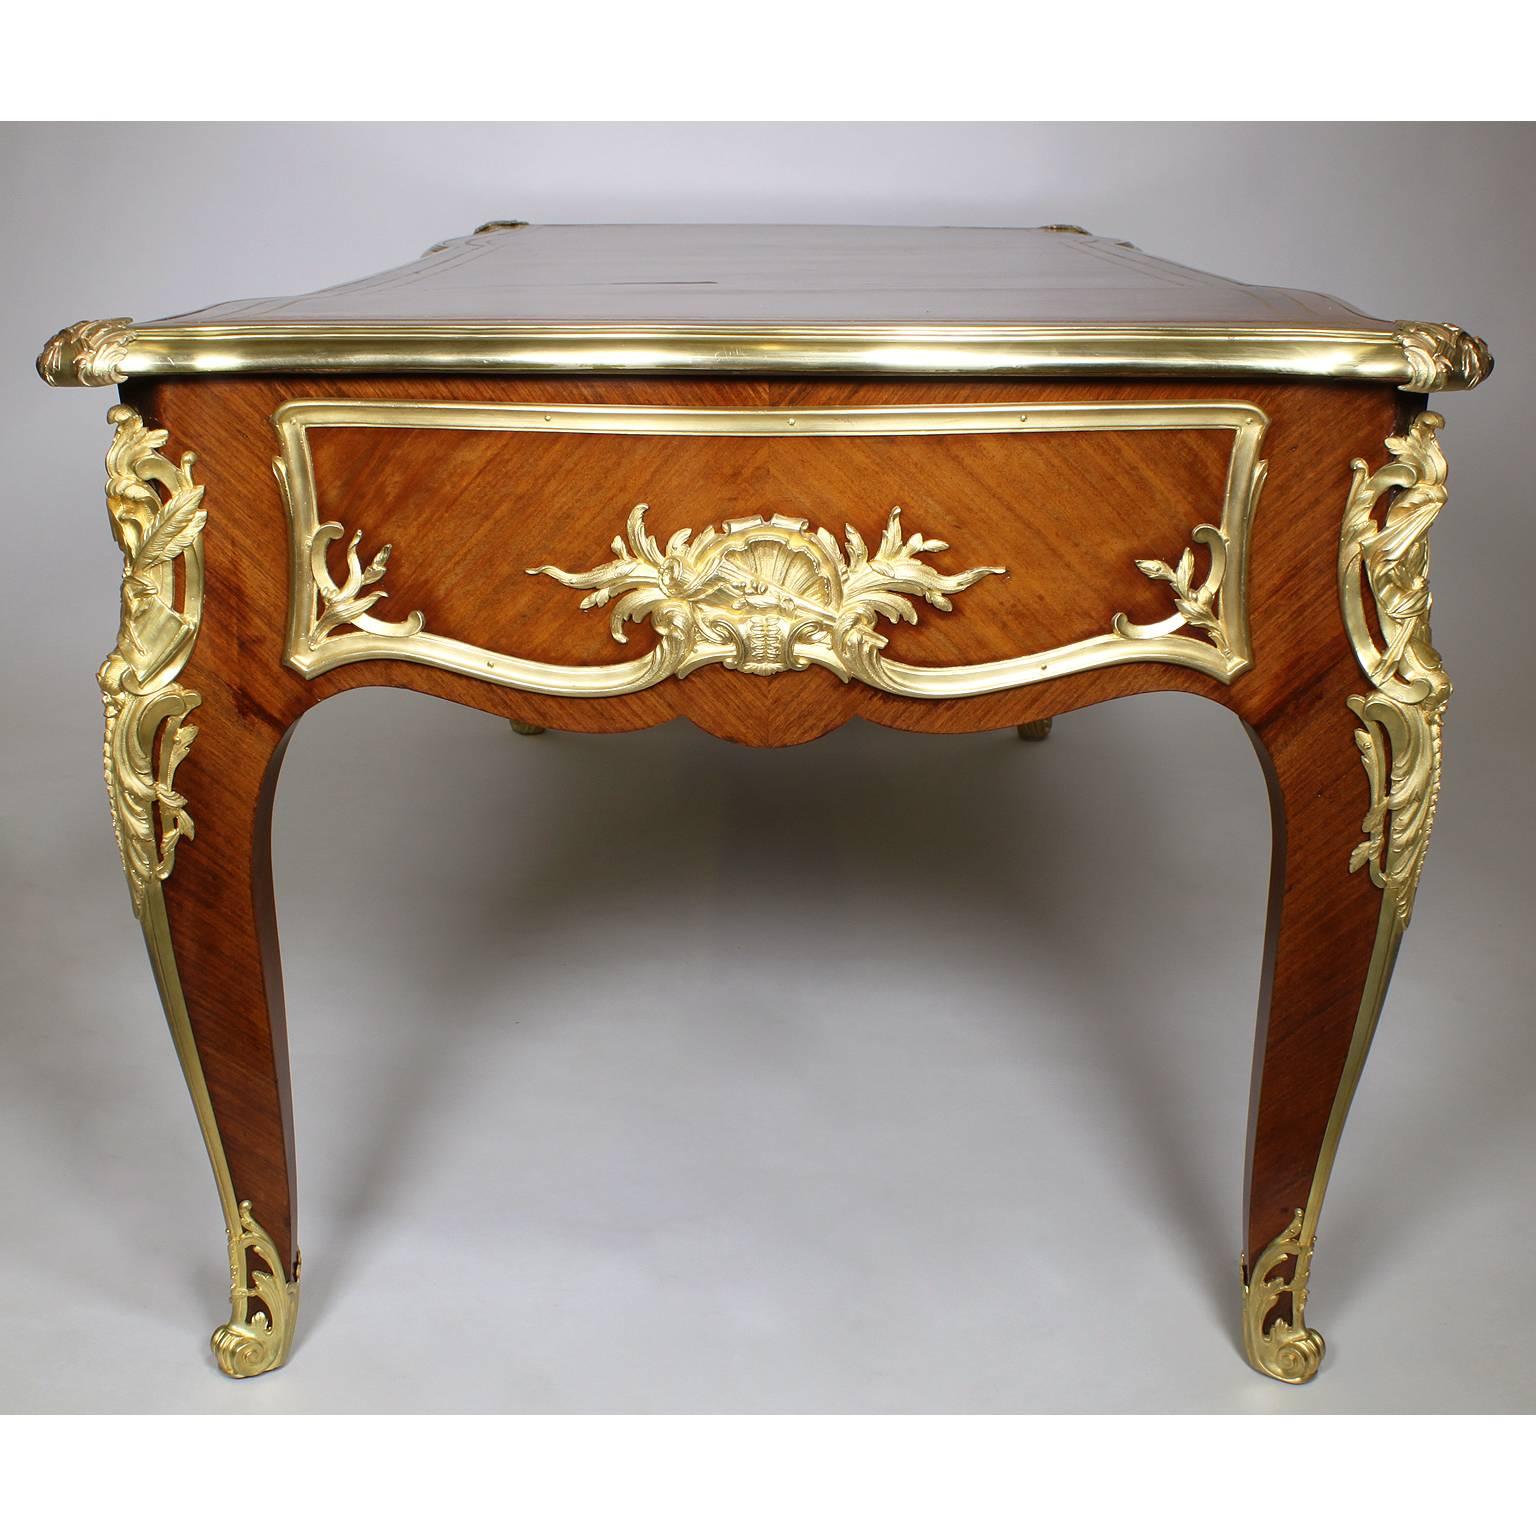 French Louis XV Style Gilt Bronze-Mounted Kingwood Three-Drawer Bureau Plat Desk For Sale 1